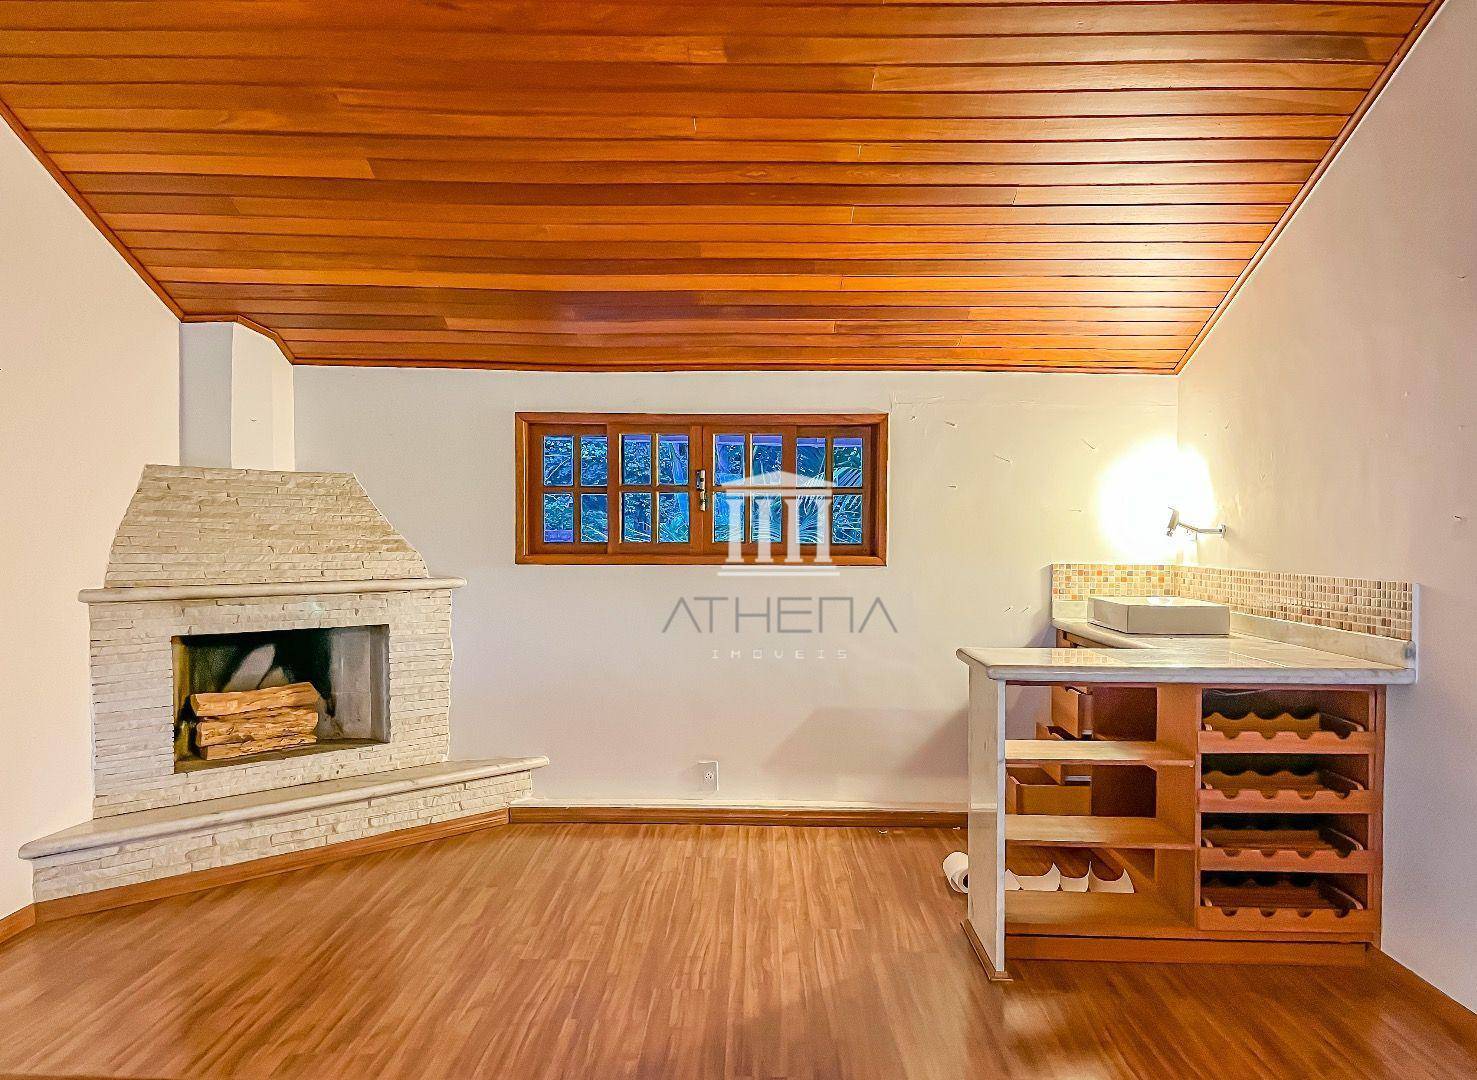 Casa à venda em Panorama, Teresópolis - RJ - Foto 1